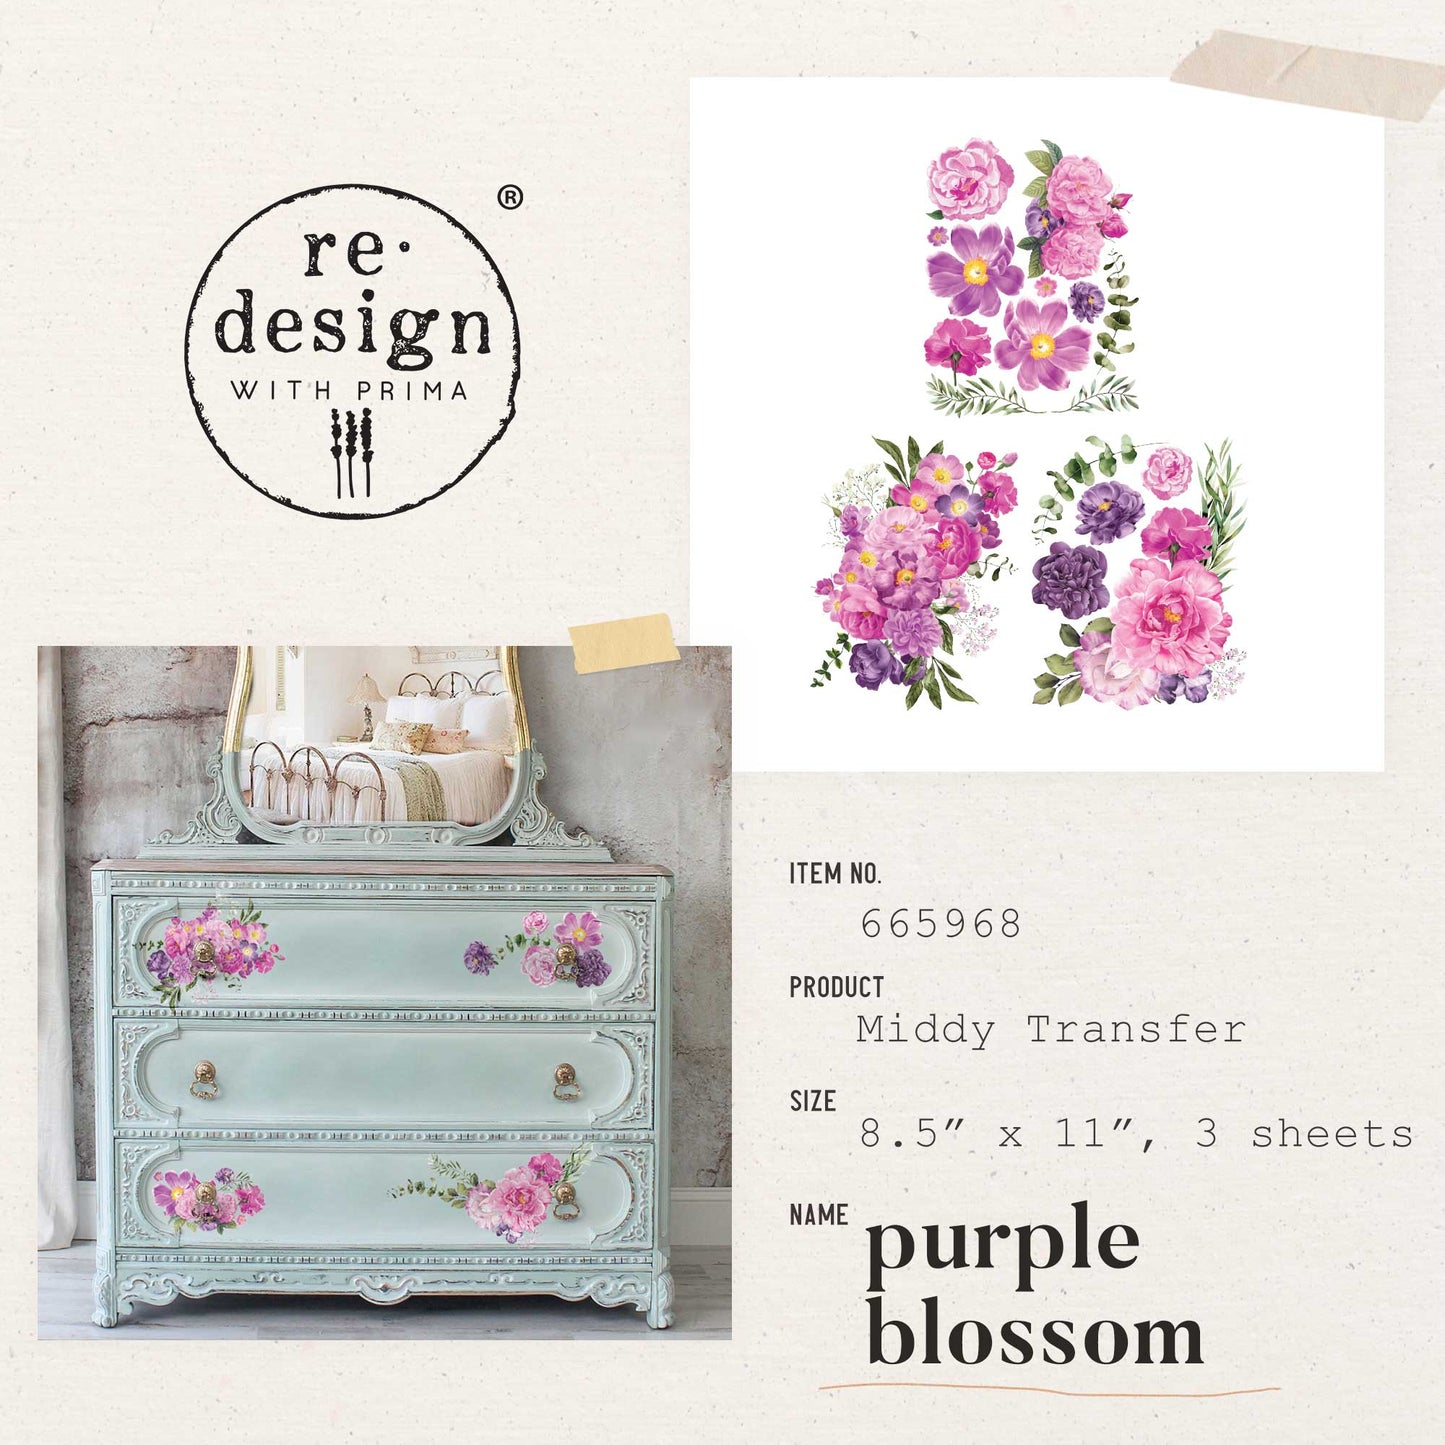 Transferfolien | Redesign Transfer - Purple Blossom